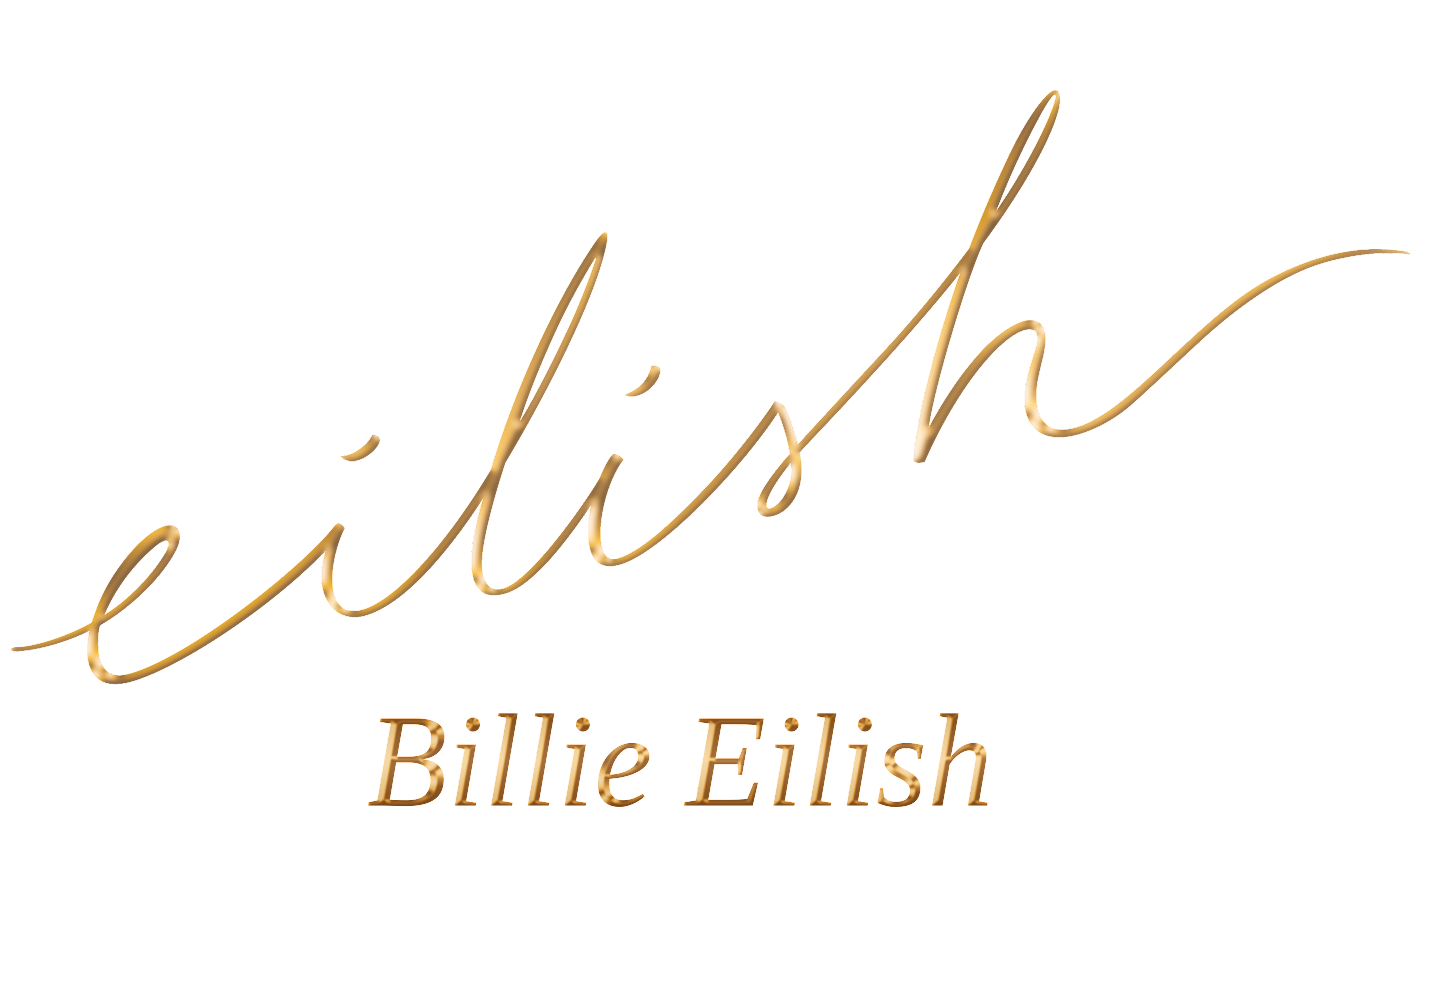 eilish Billie Eilish